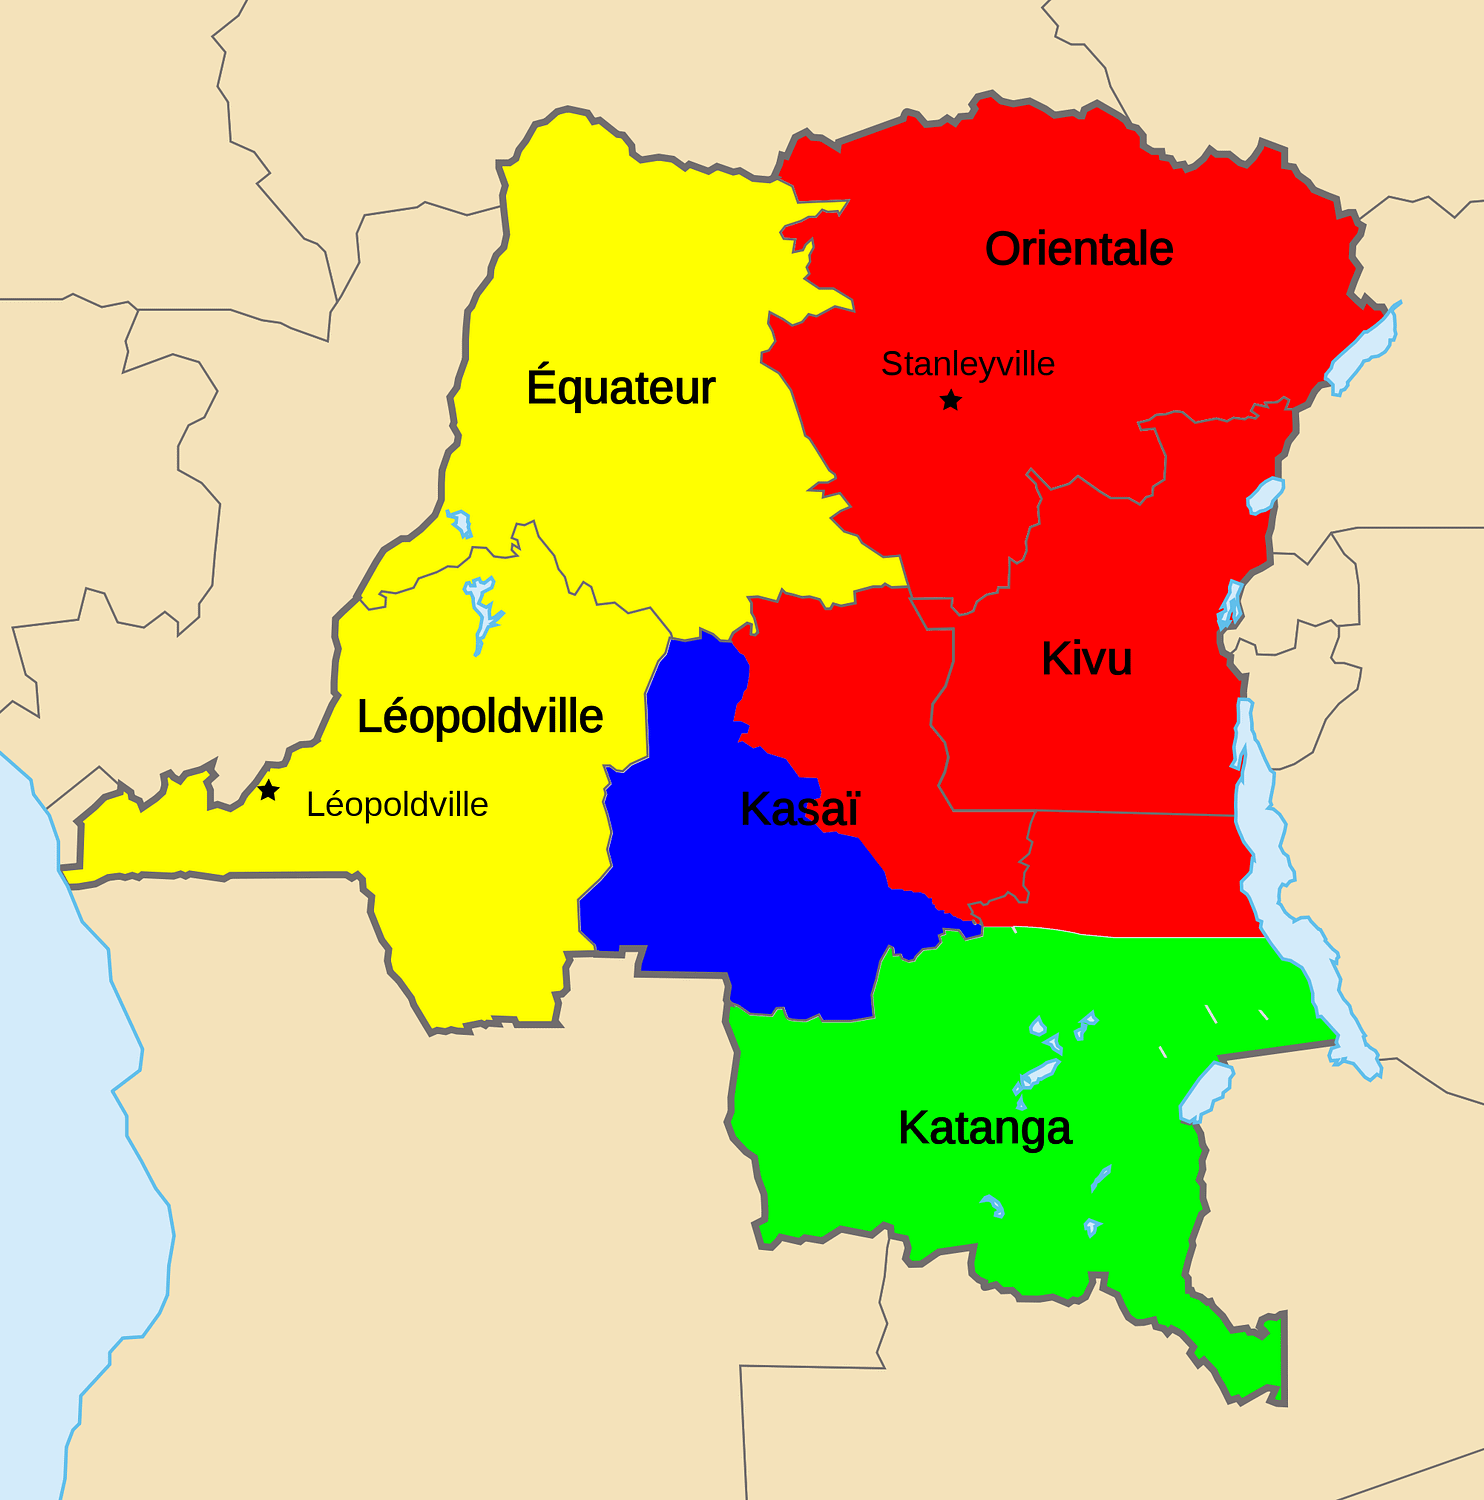 Balkanization of Congo